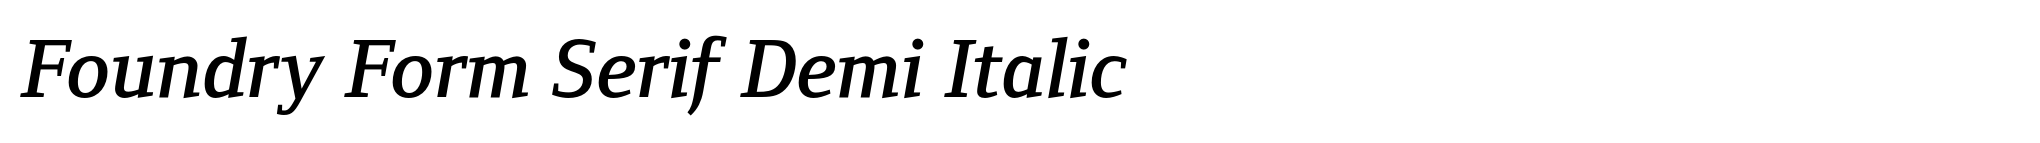 Foundry Form Serif Demi Italic image